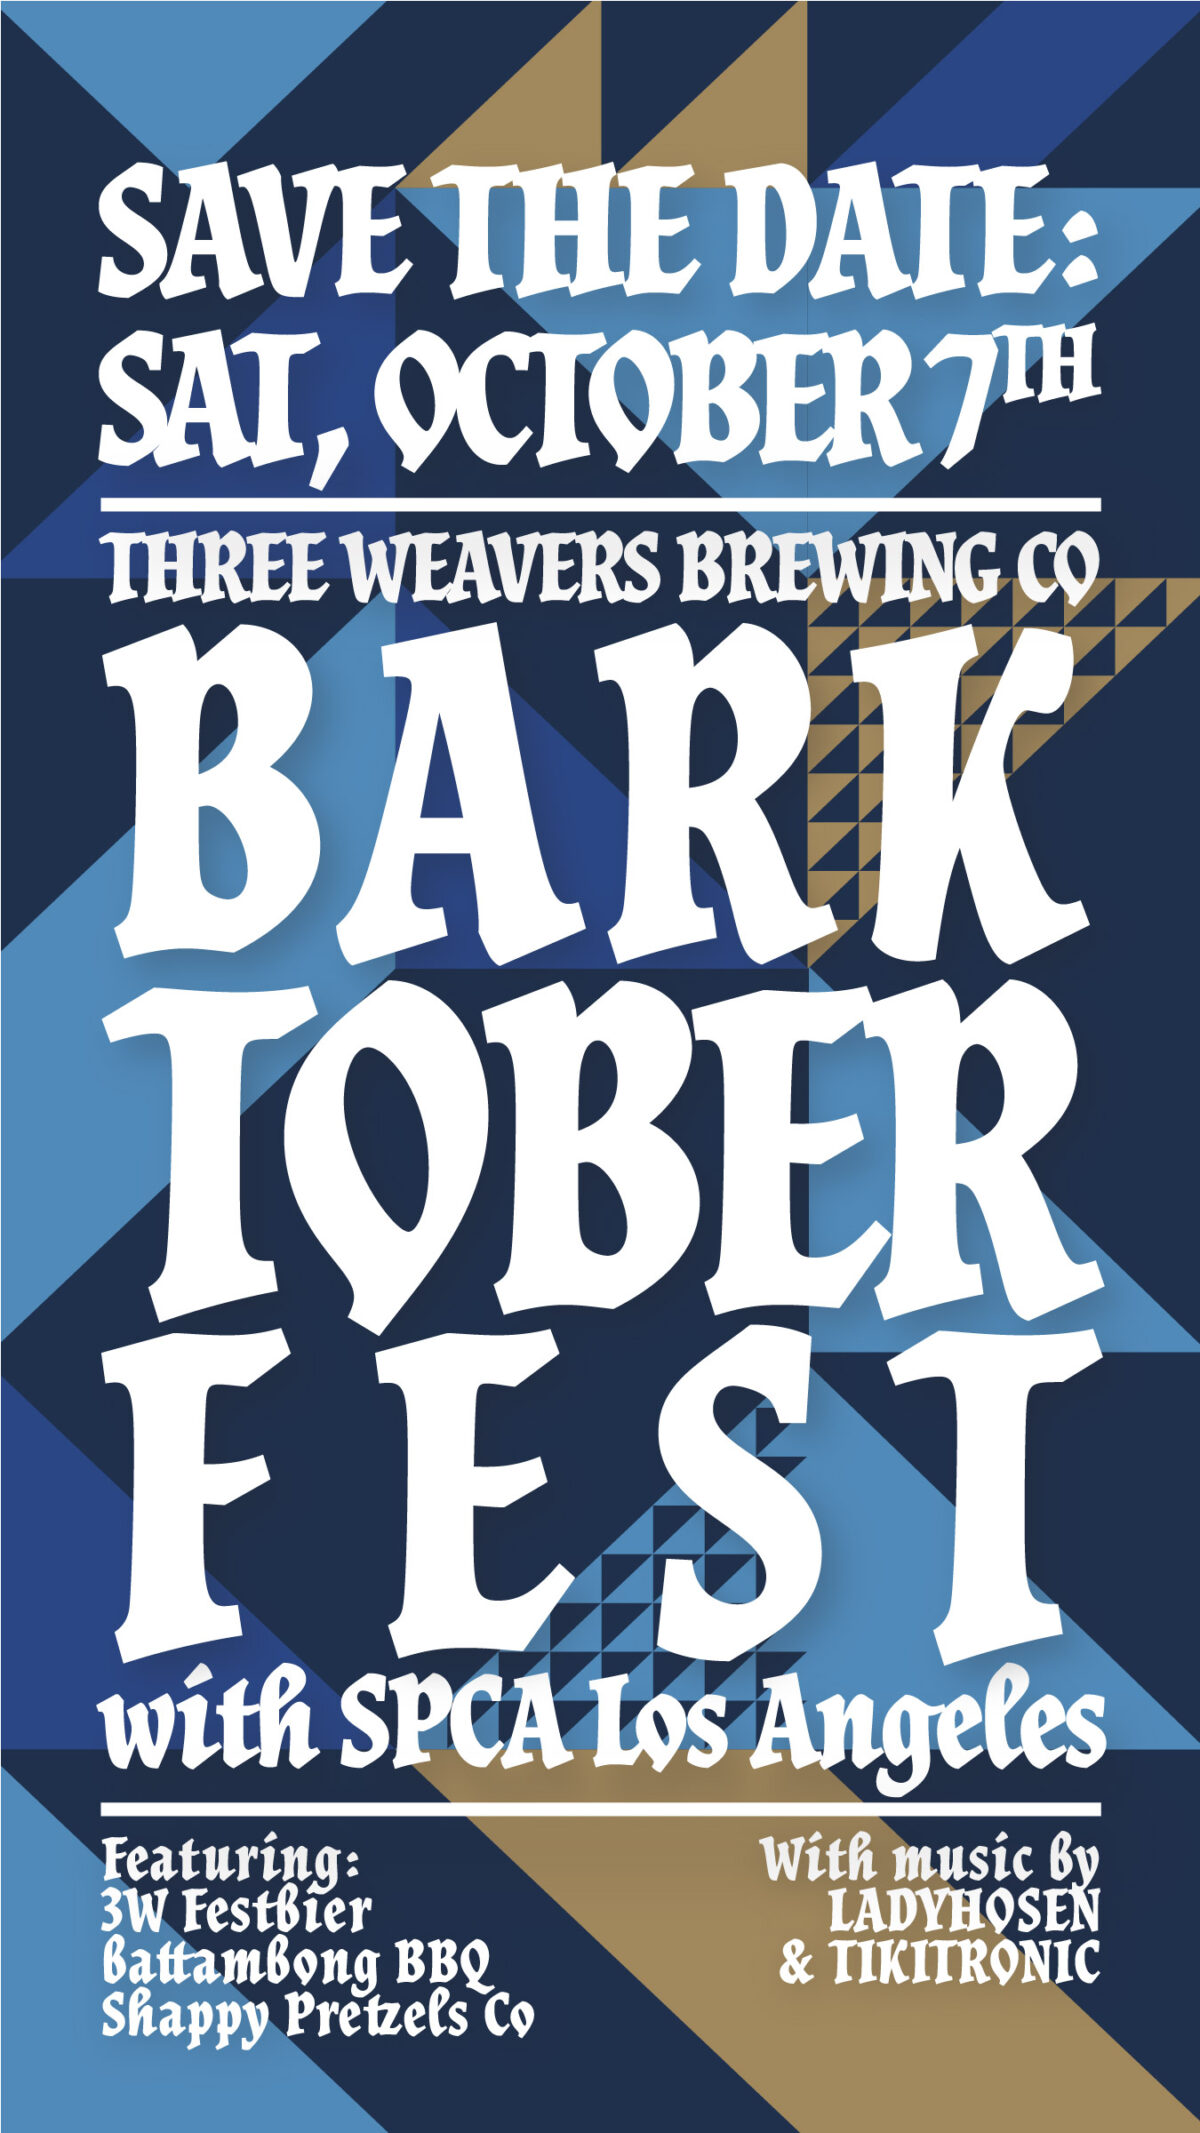 Bark-toberfest – an Oktoberfest Celebration